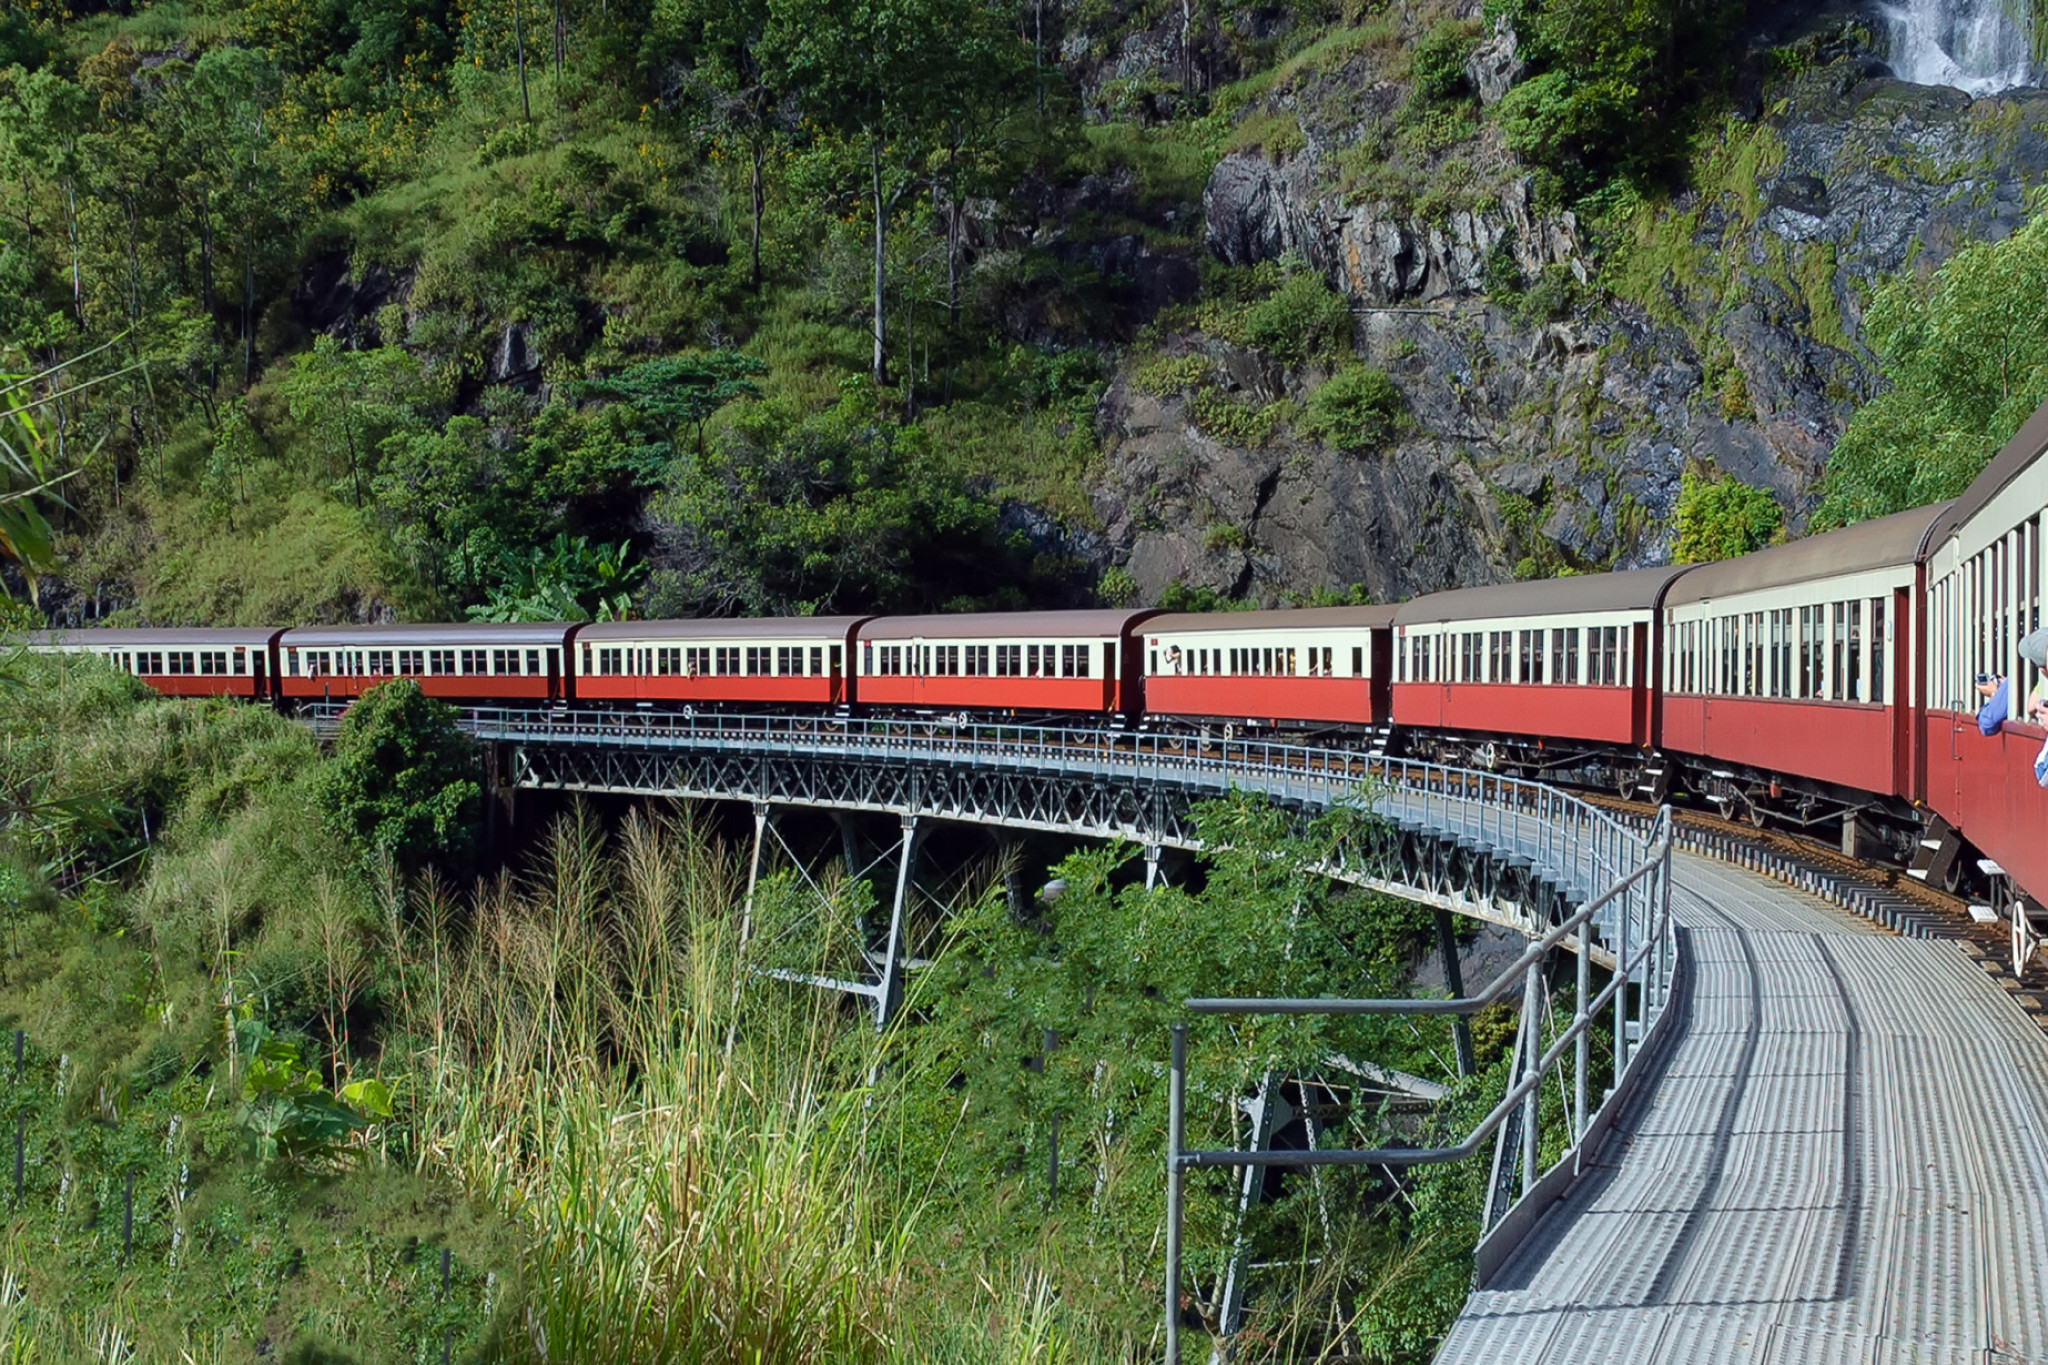 Iconic train rolls again - feature photo